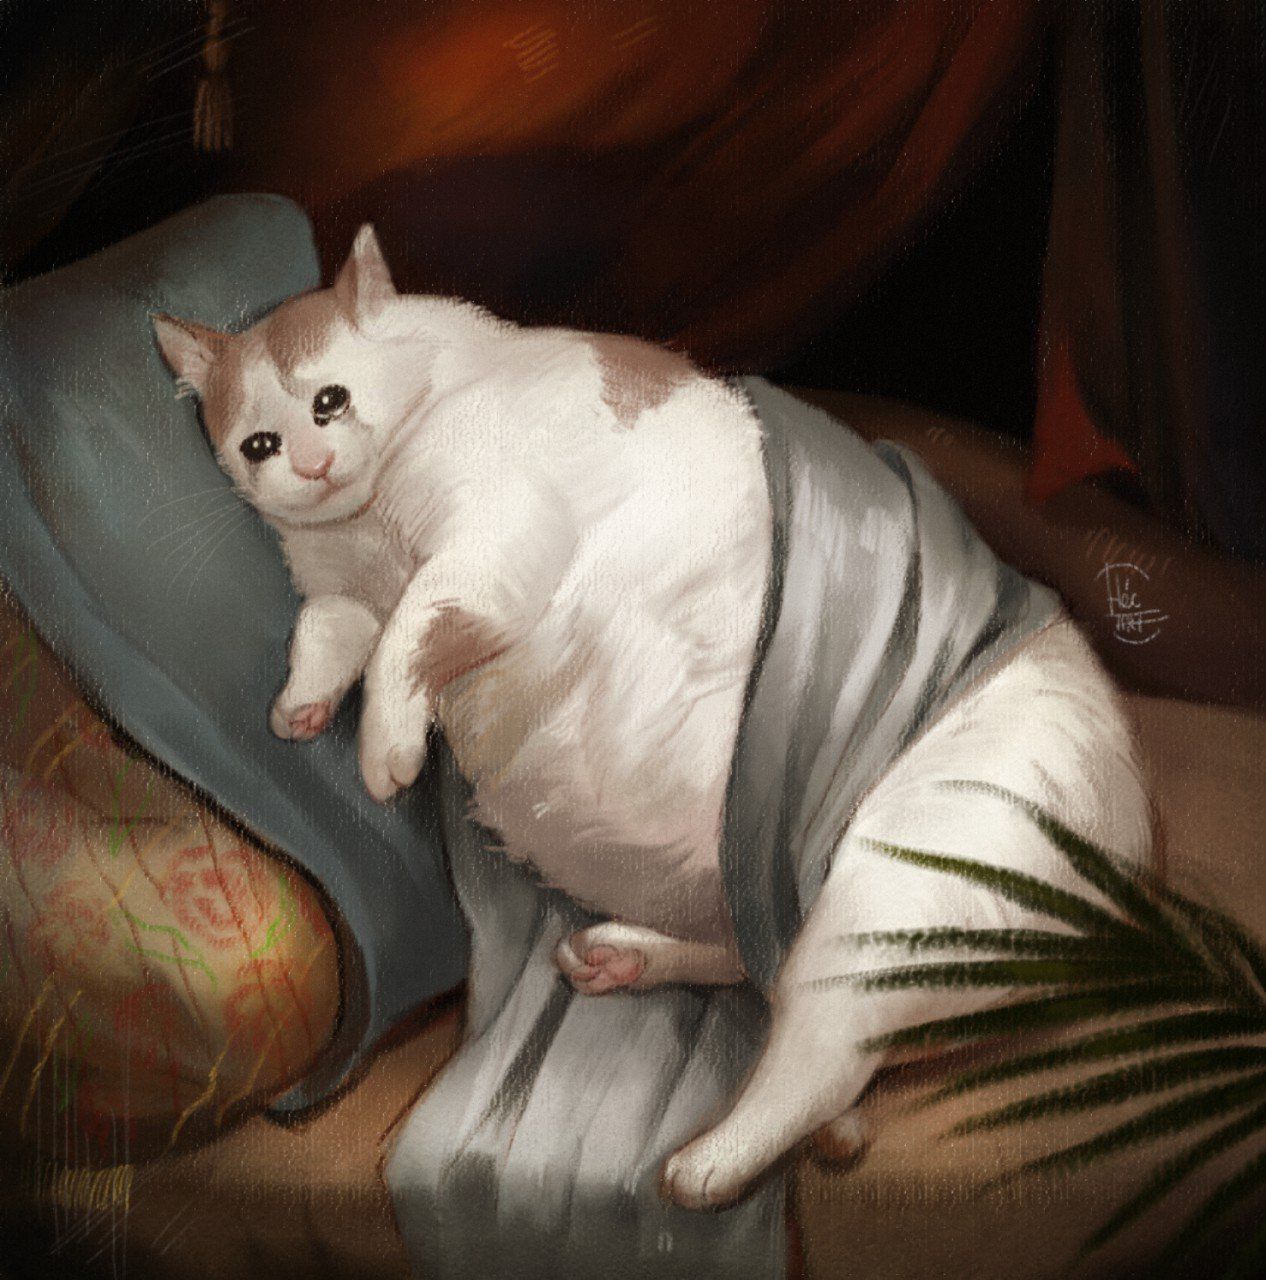 Sad cat renisance painting - meme